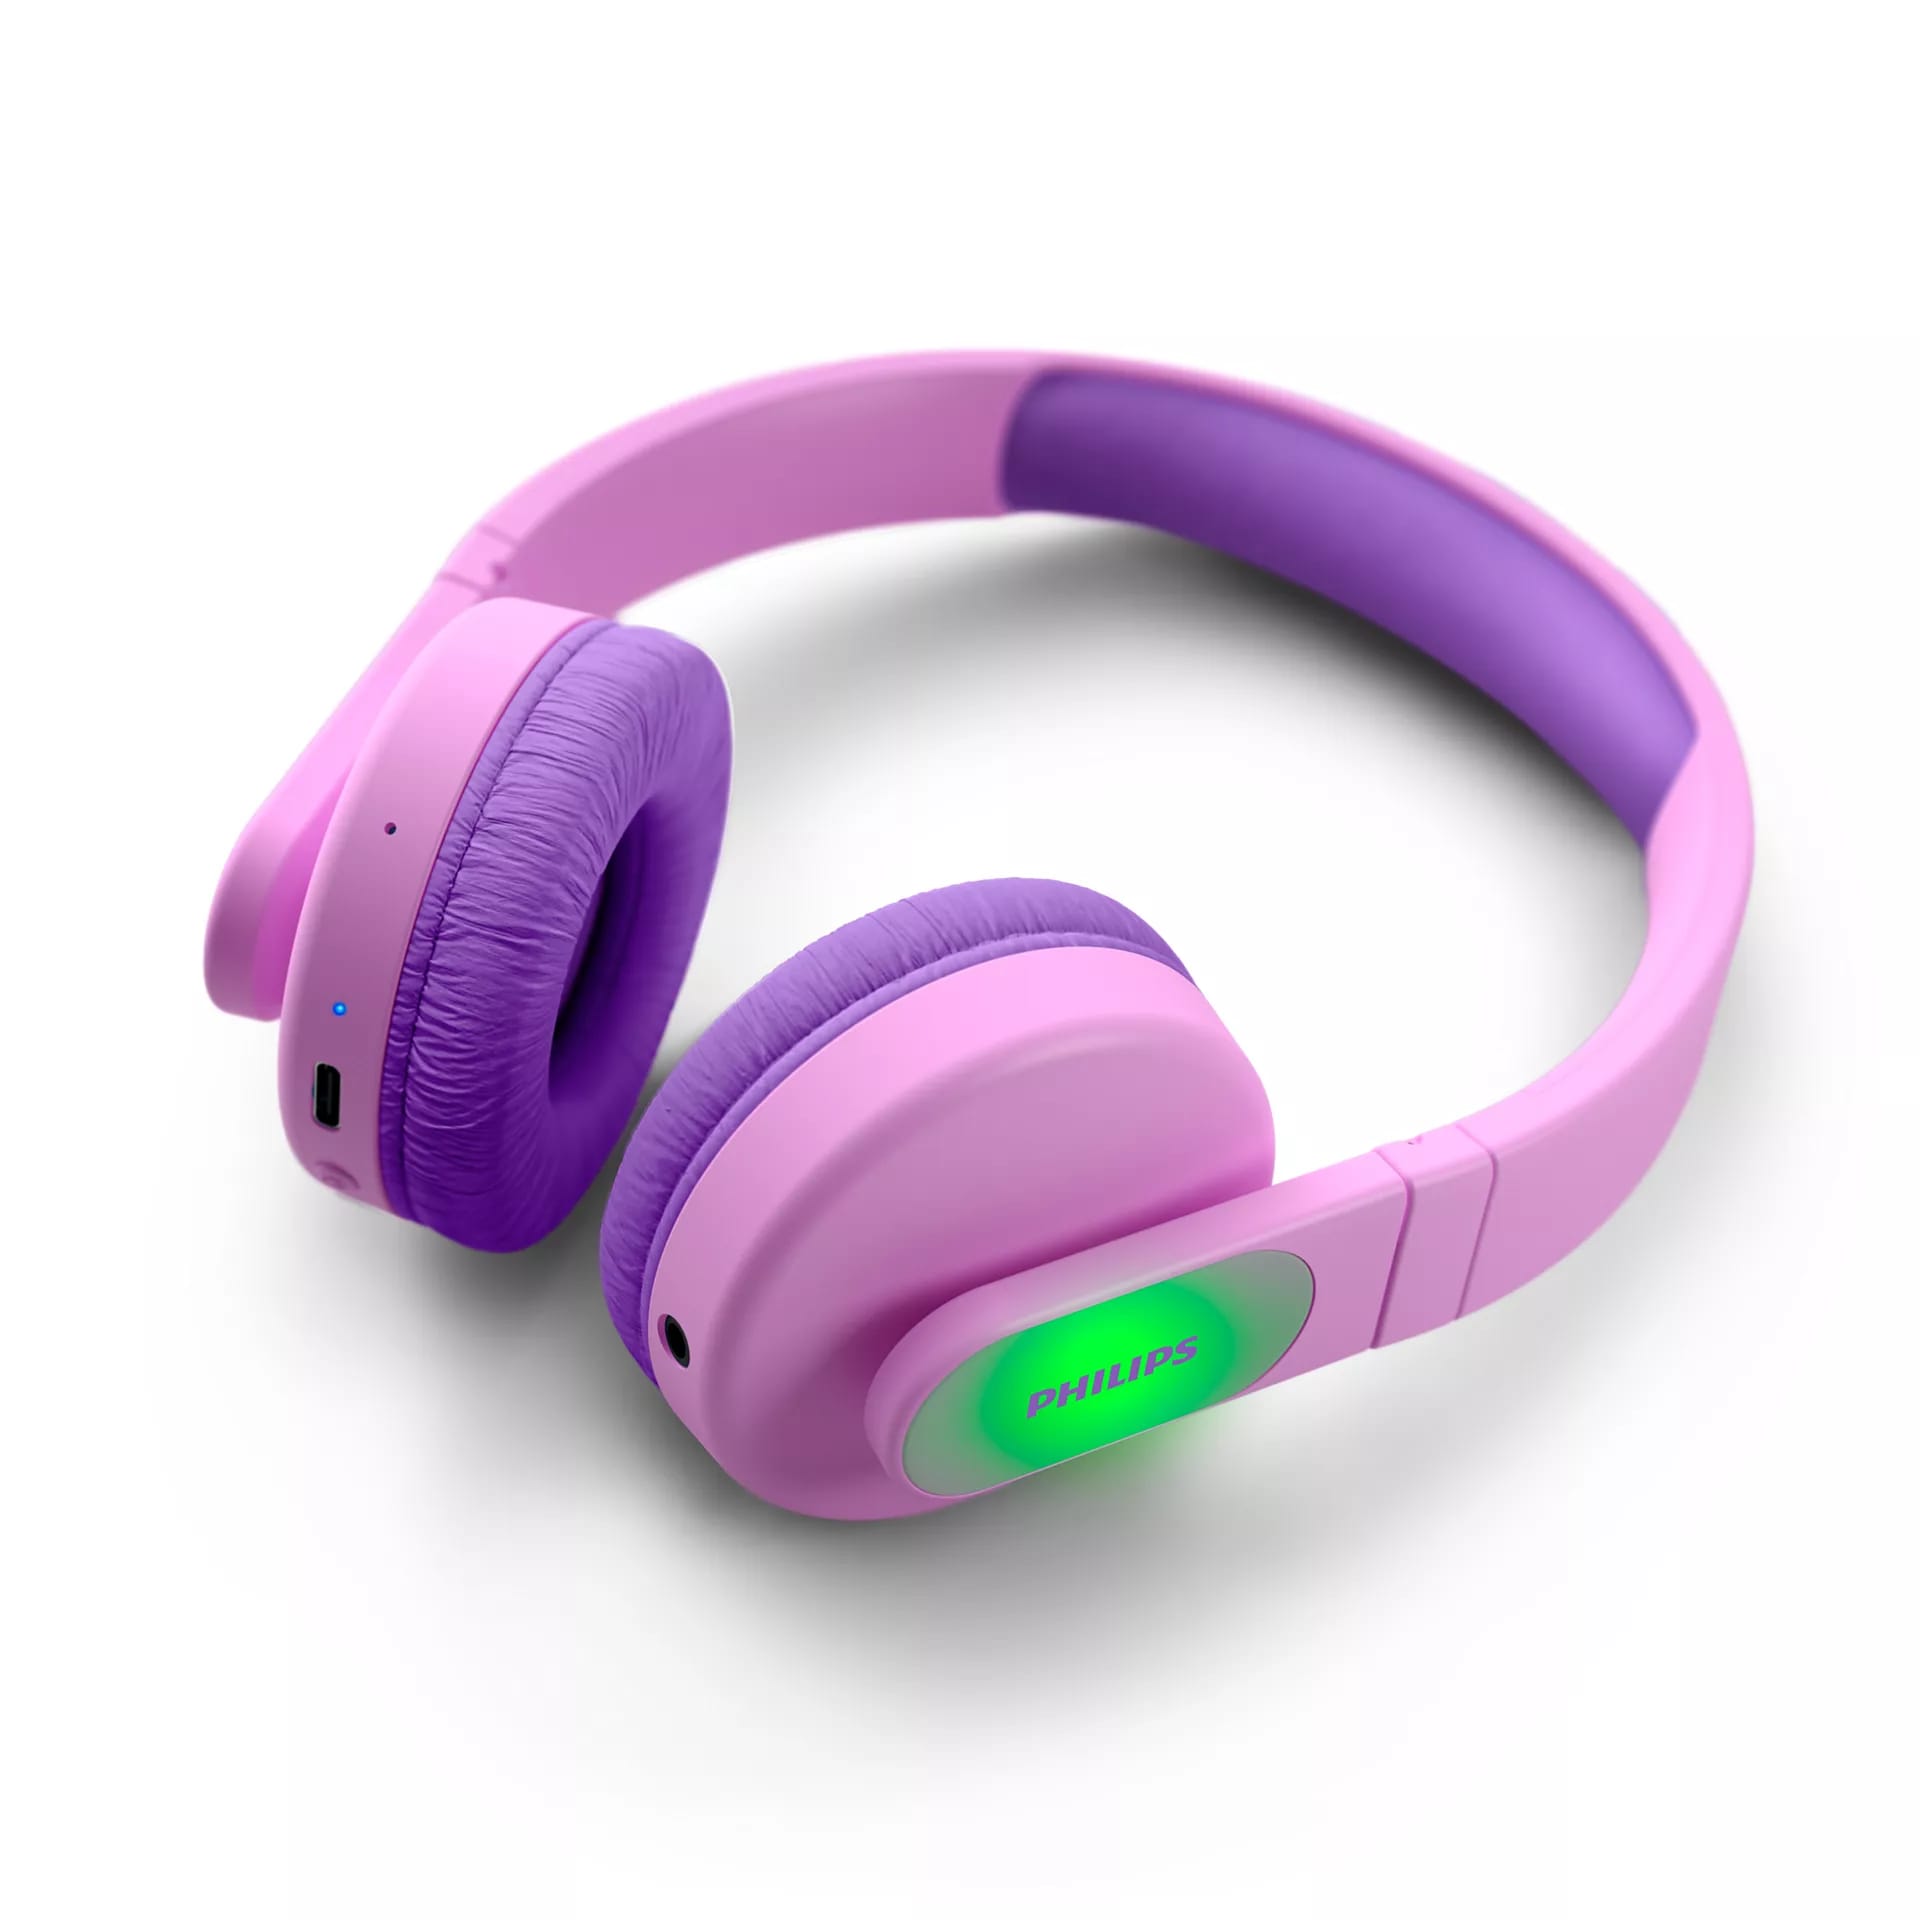 Philips-Kopfhörer kaufen - Lieblingsmusik überall hören | Cyberport